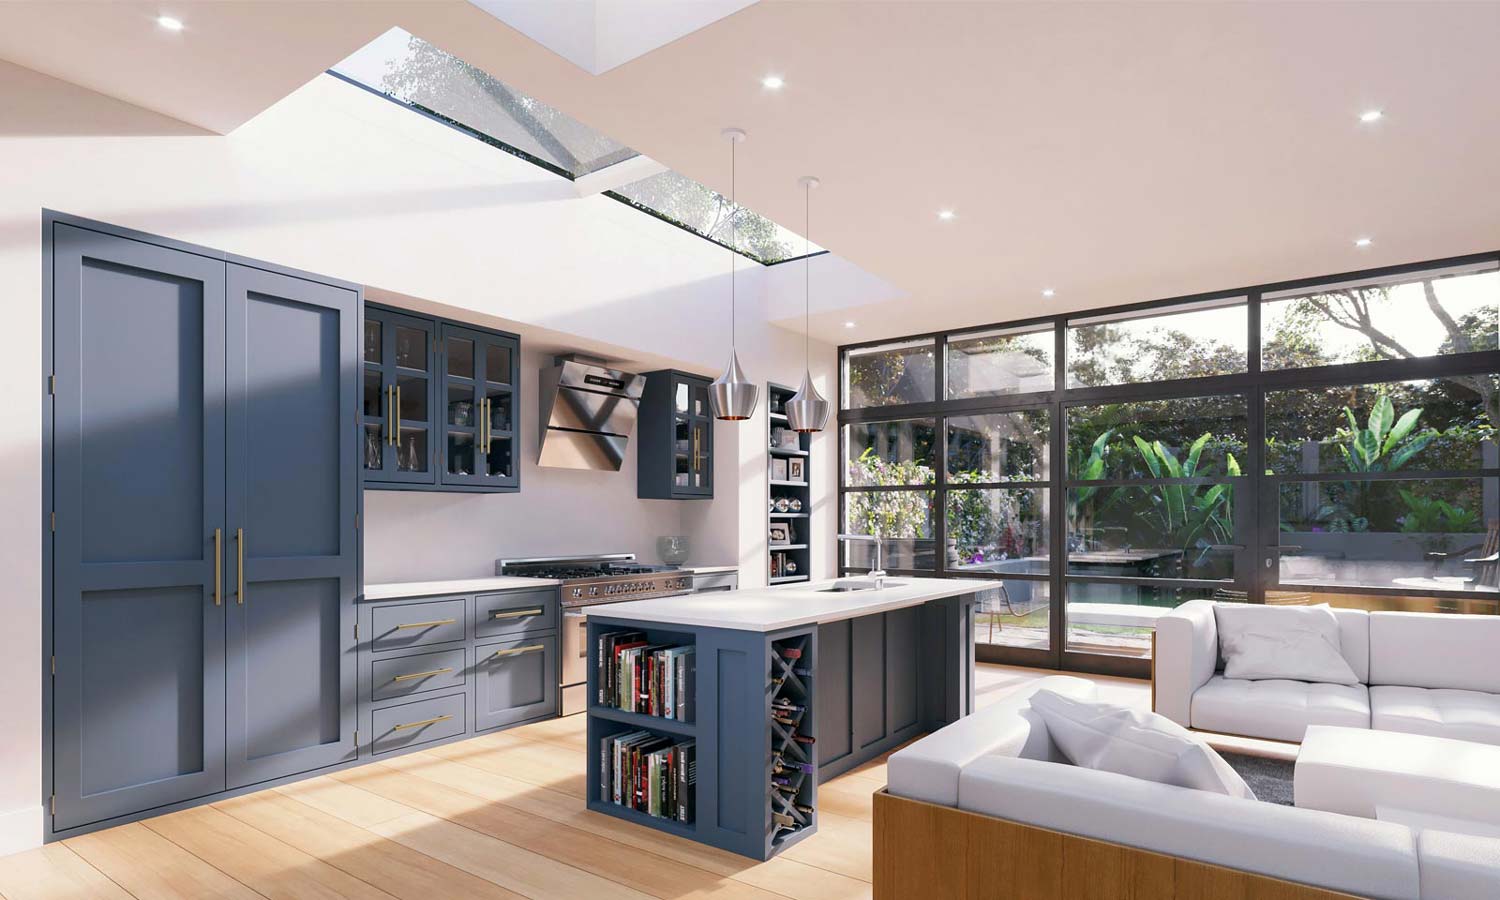 Modular rooflight system in open plan kitchen extension